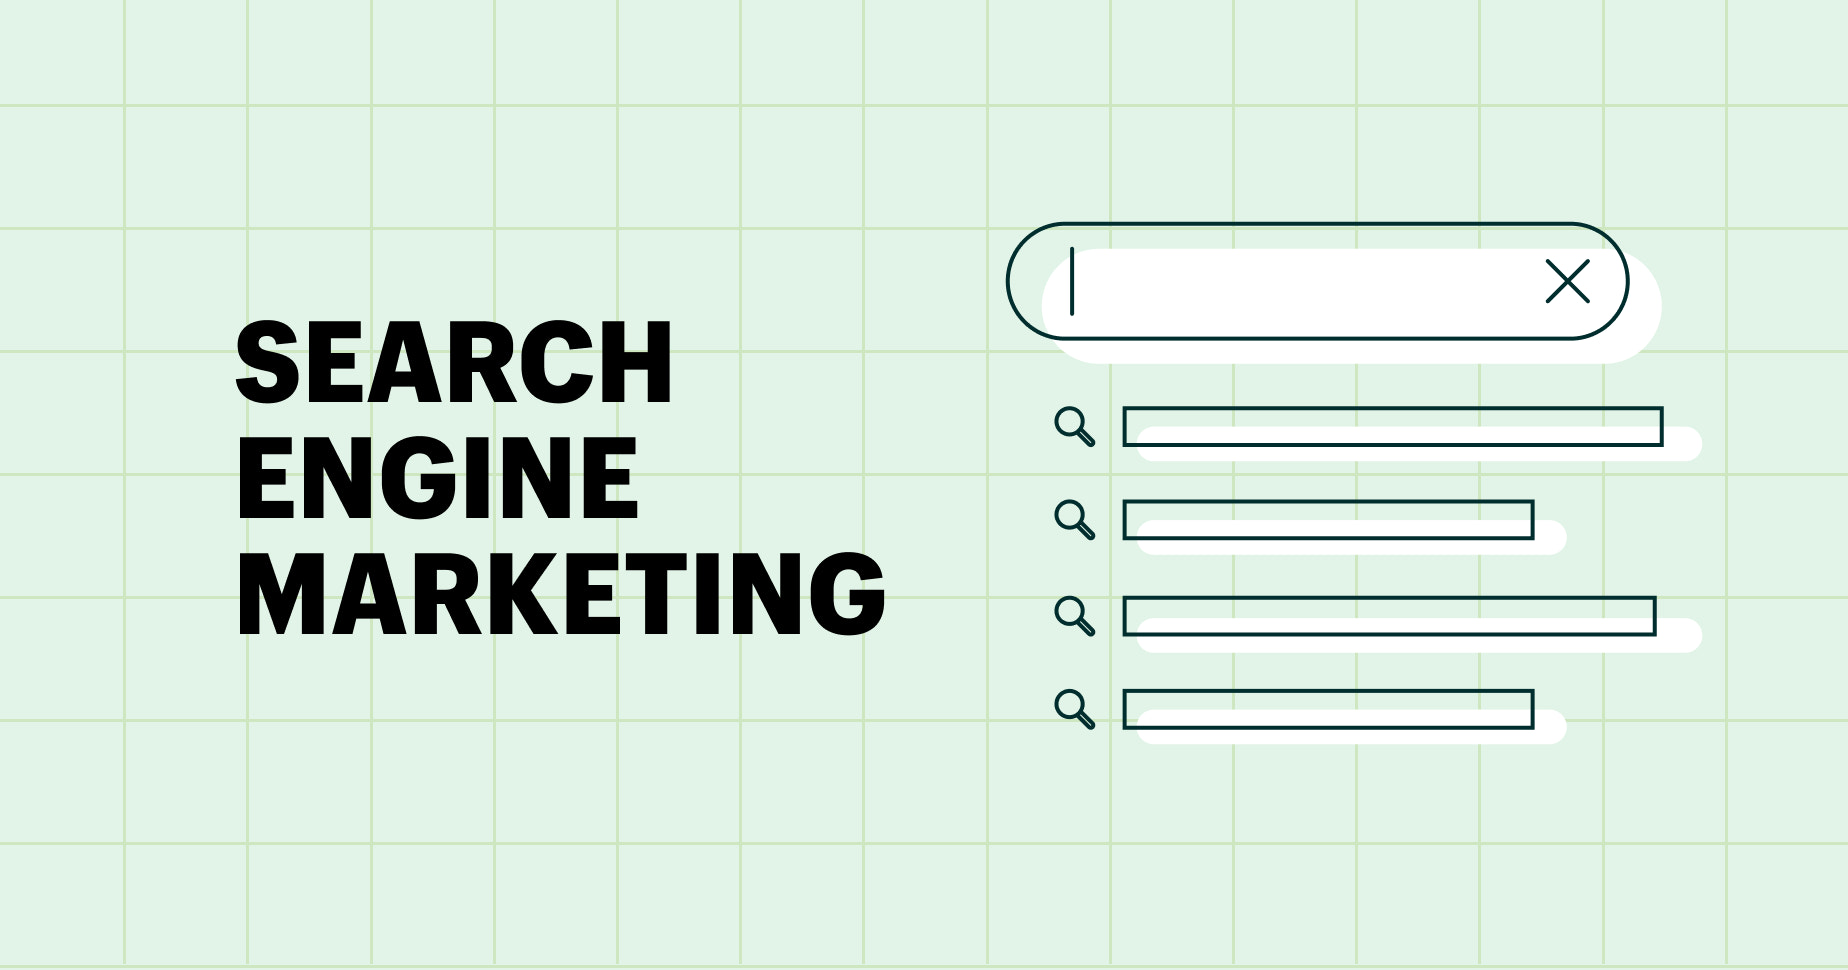 google search engine marketing case study analysis pdf